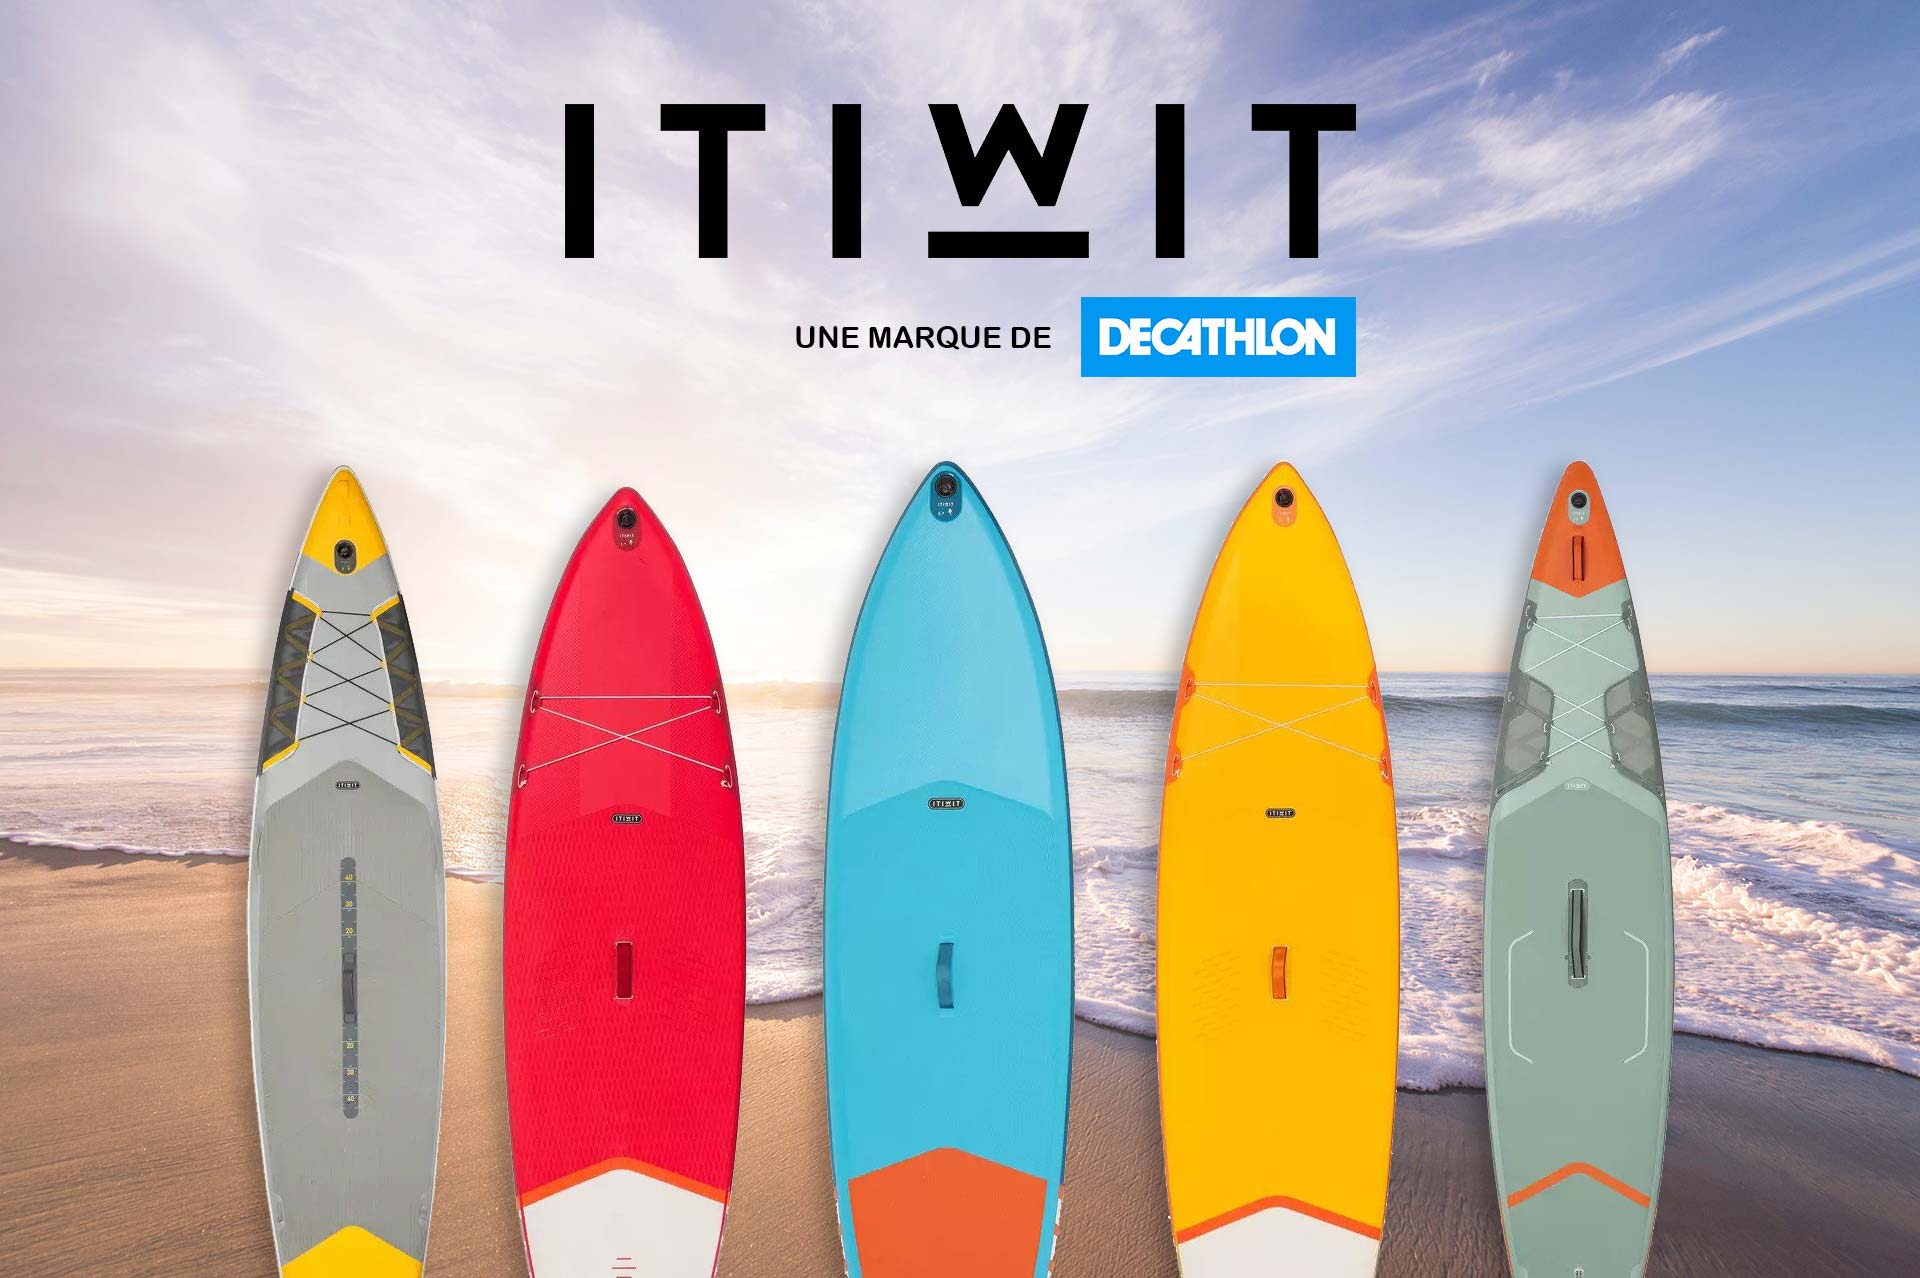 El Paddle surf Decathlon (Itiwit)